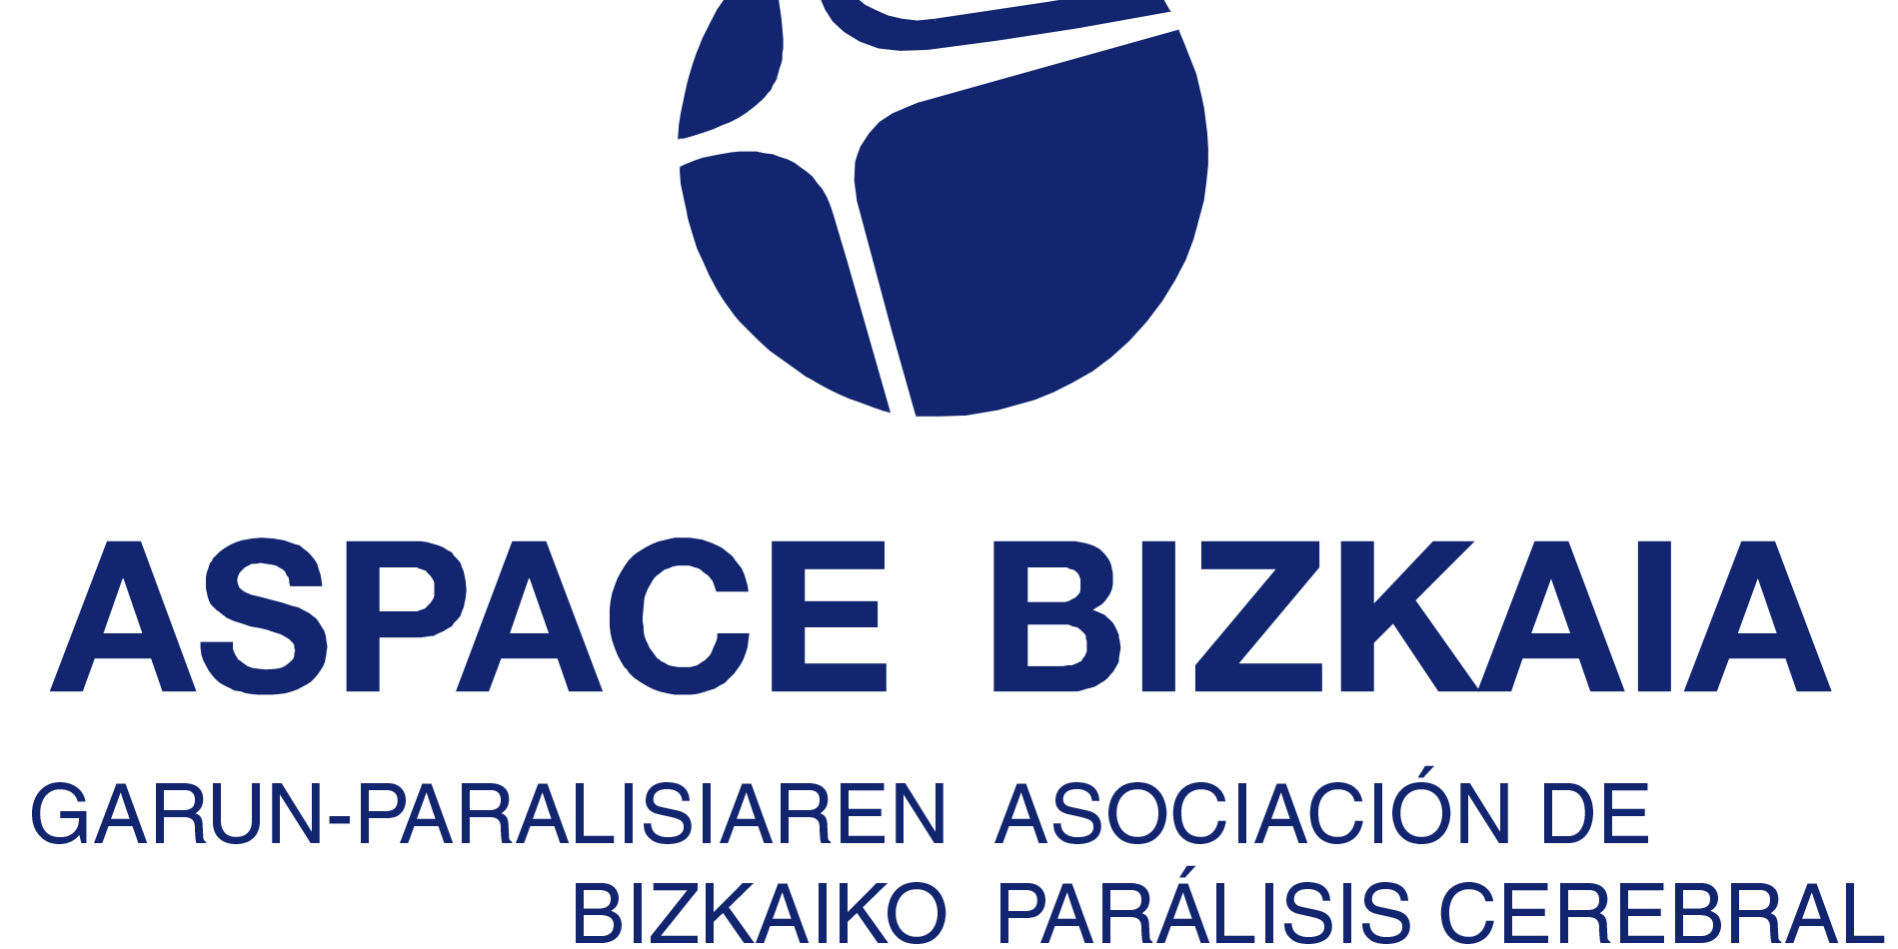 Aspace Bizkaia